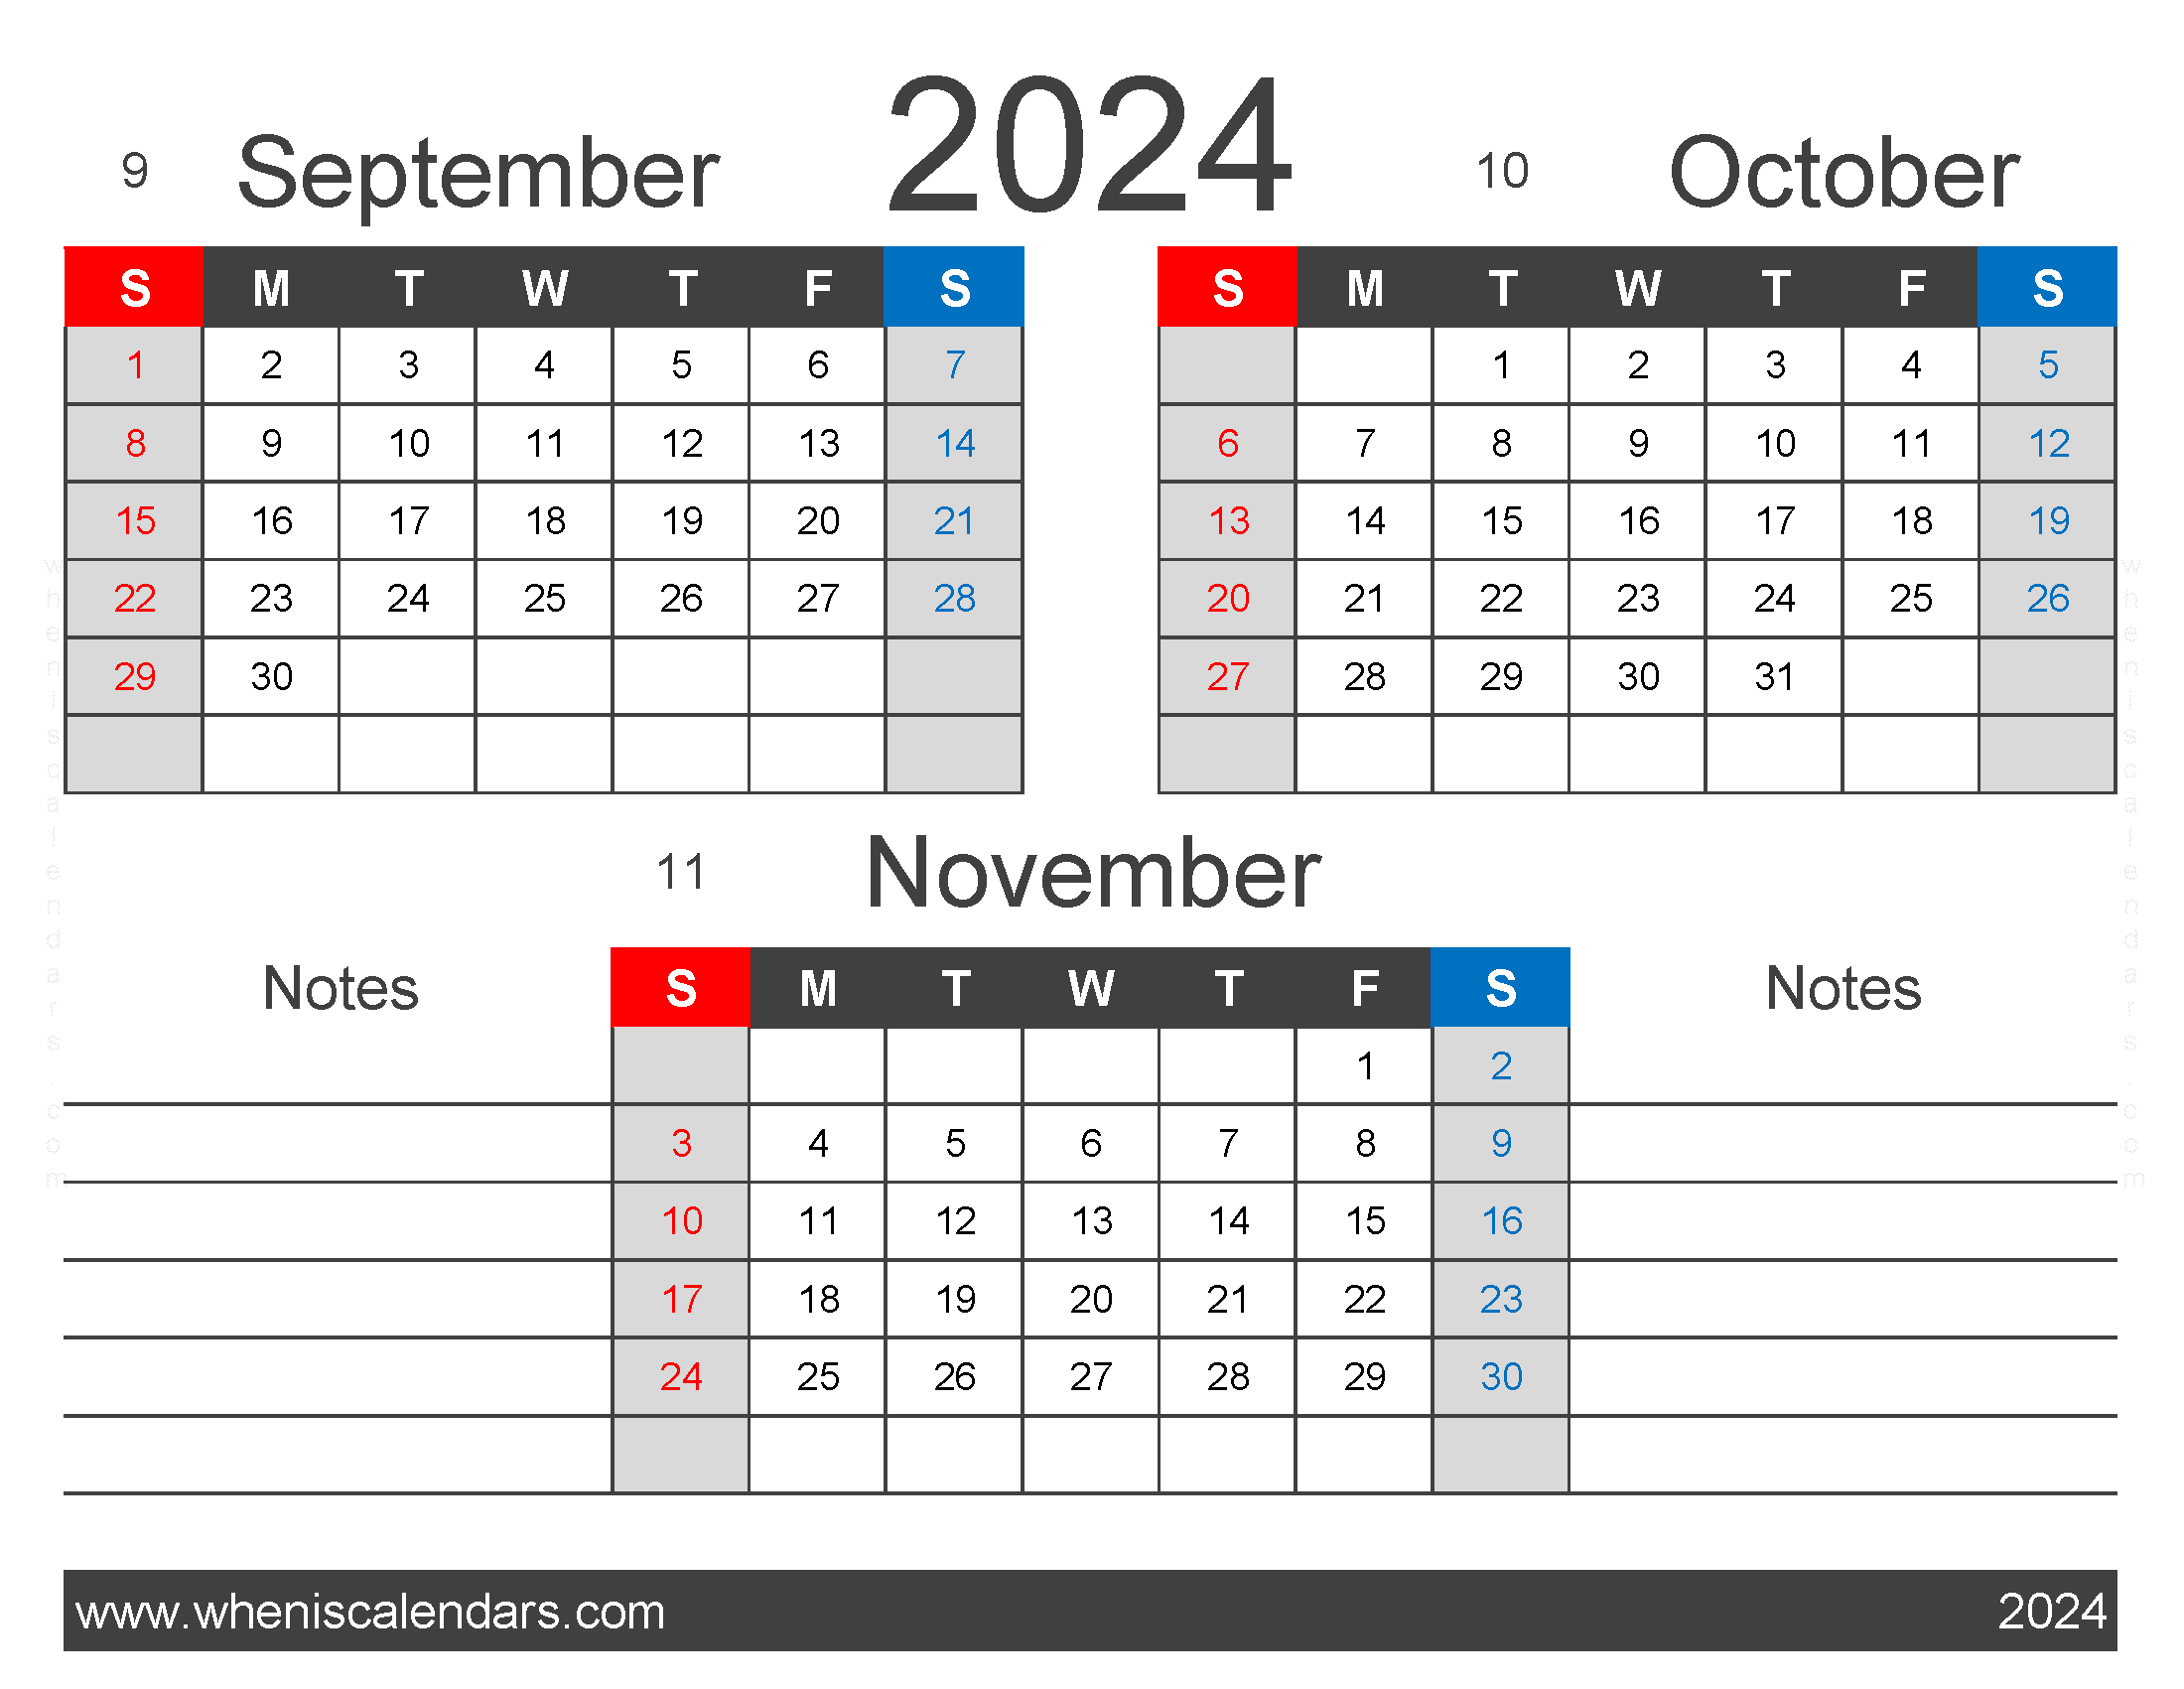 Download Sept Oct Nov Calendar 2024 SON422